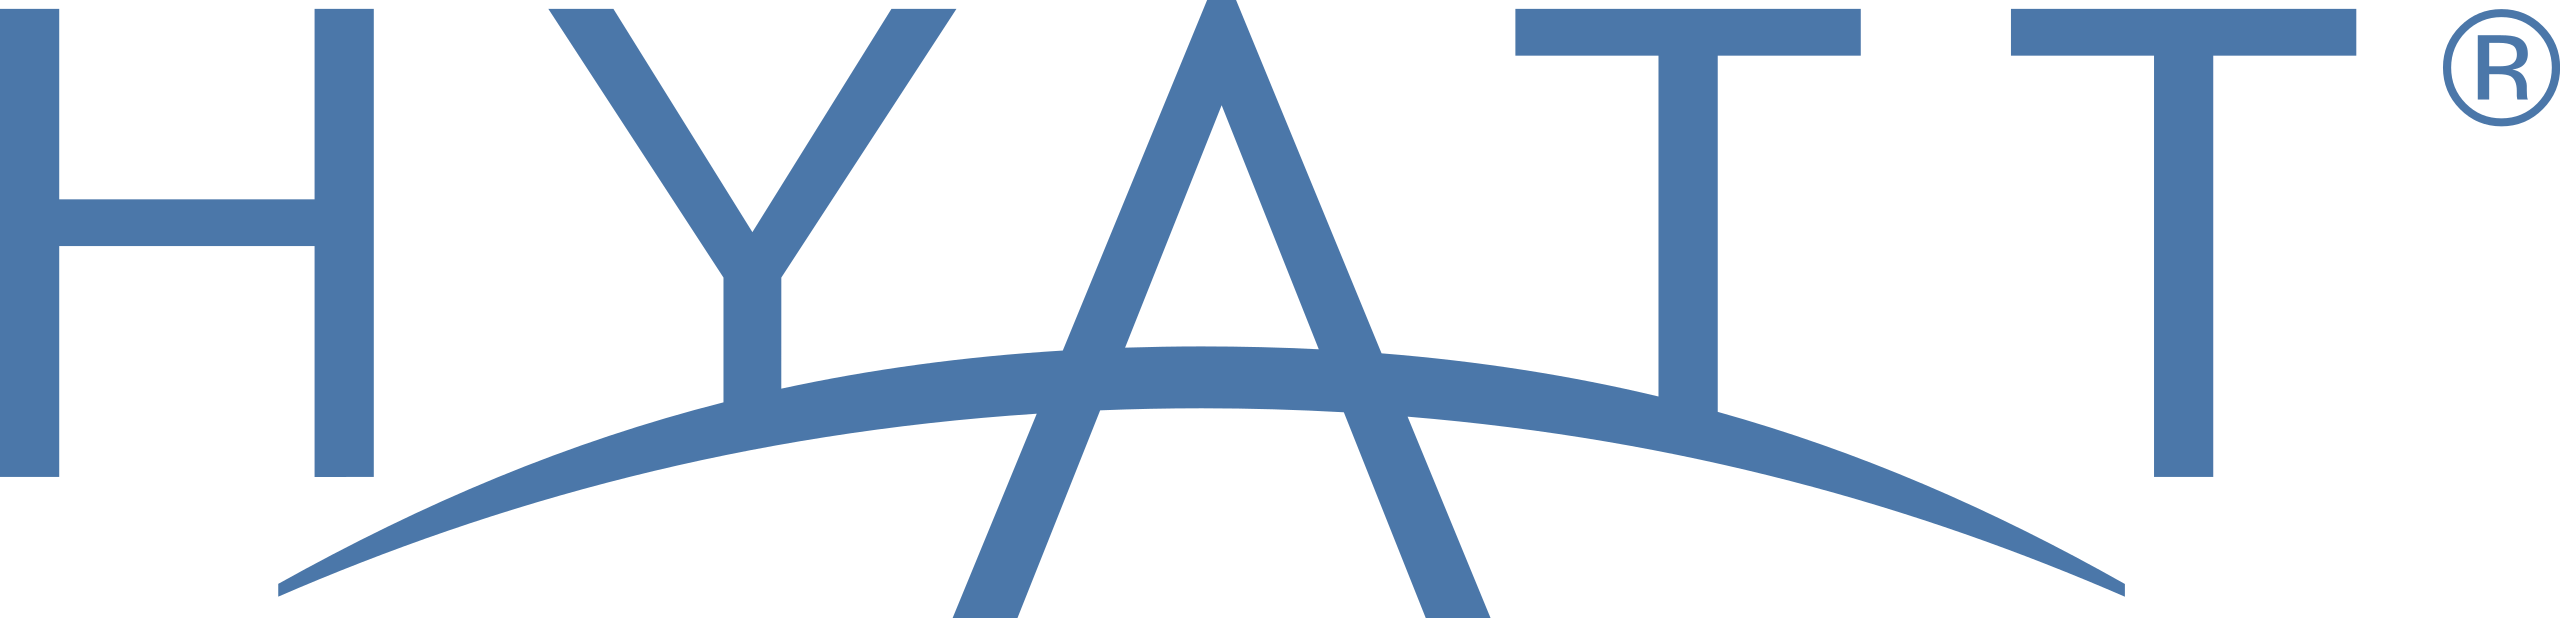 Hyatt_Logo.svg (1)